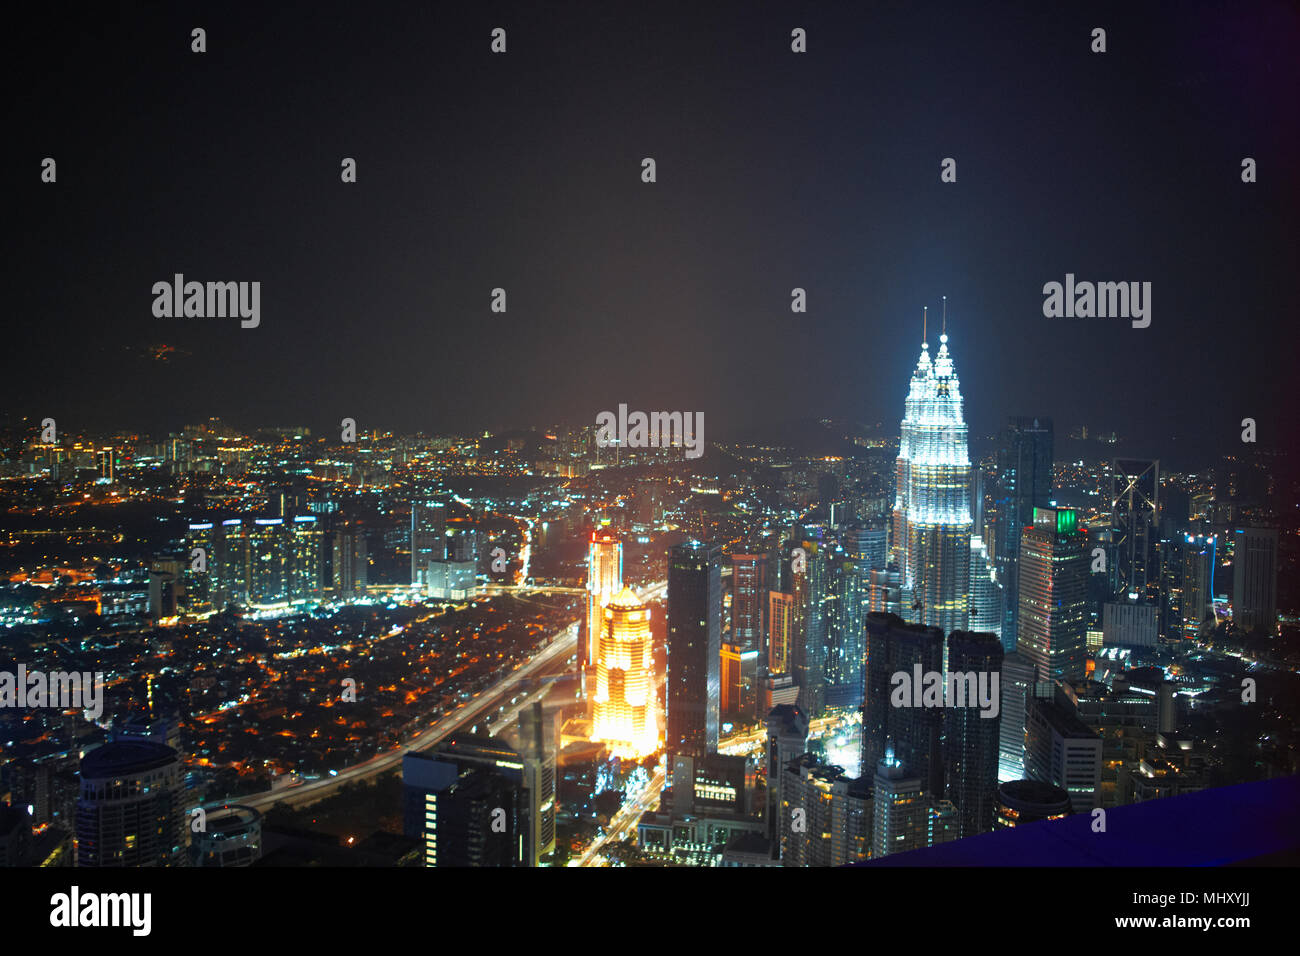 Cityscape, illuminated at night, Kuala Lumpur, Malaysia Stock Photo